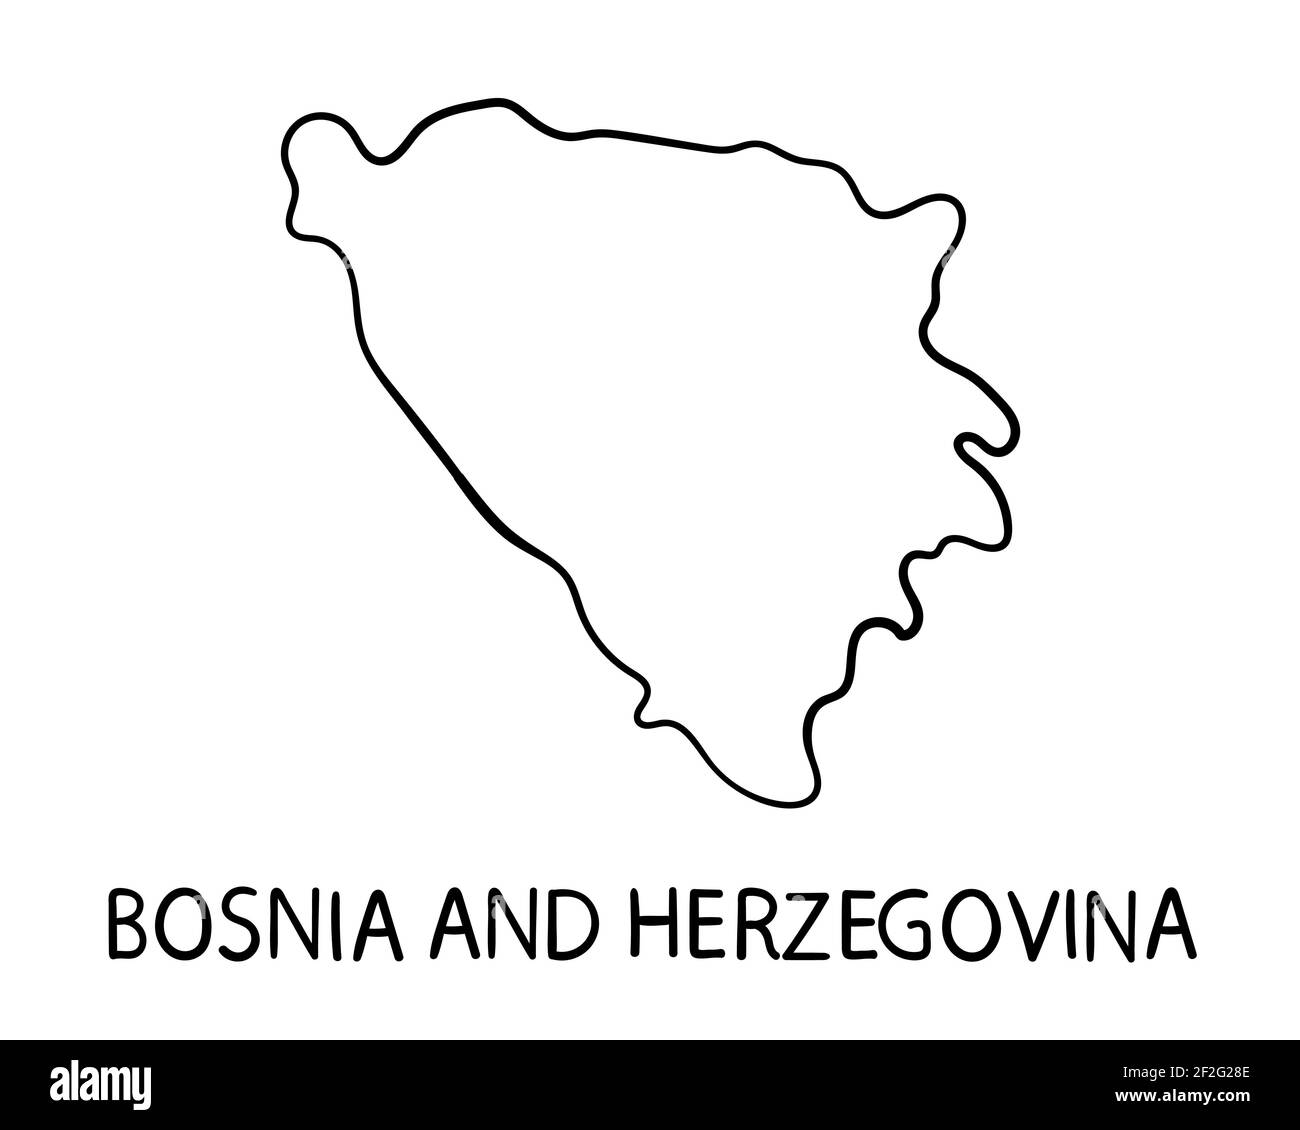 Bosnia And Herzgovina Map - Hand Drawn Illustration Stock Photo